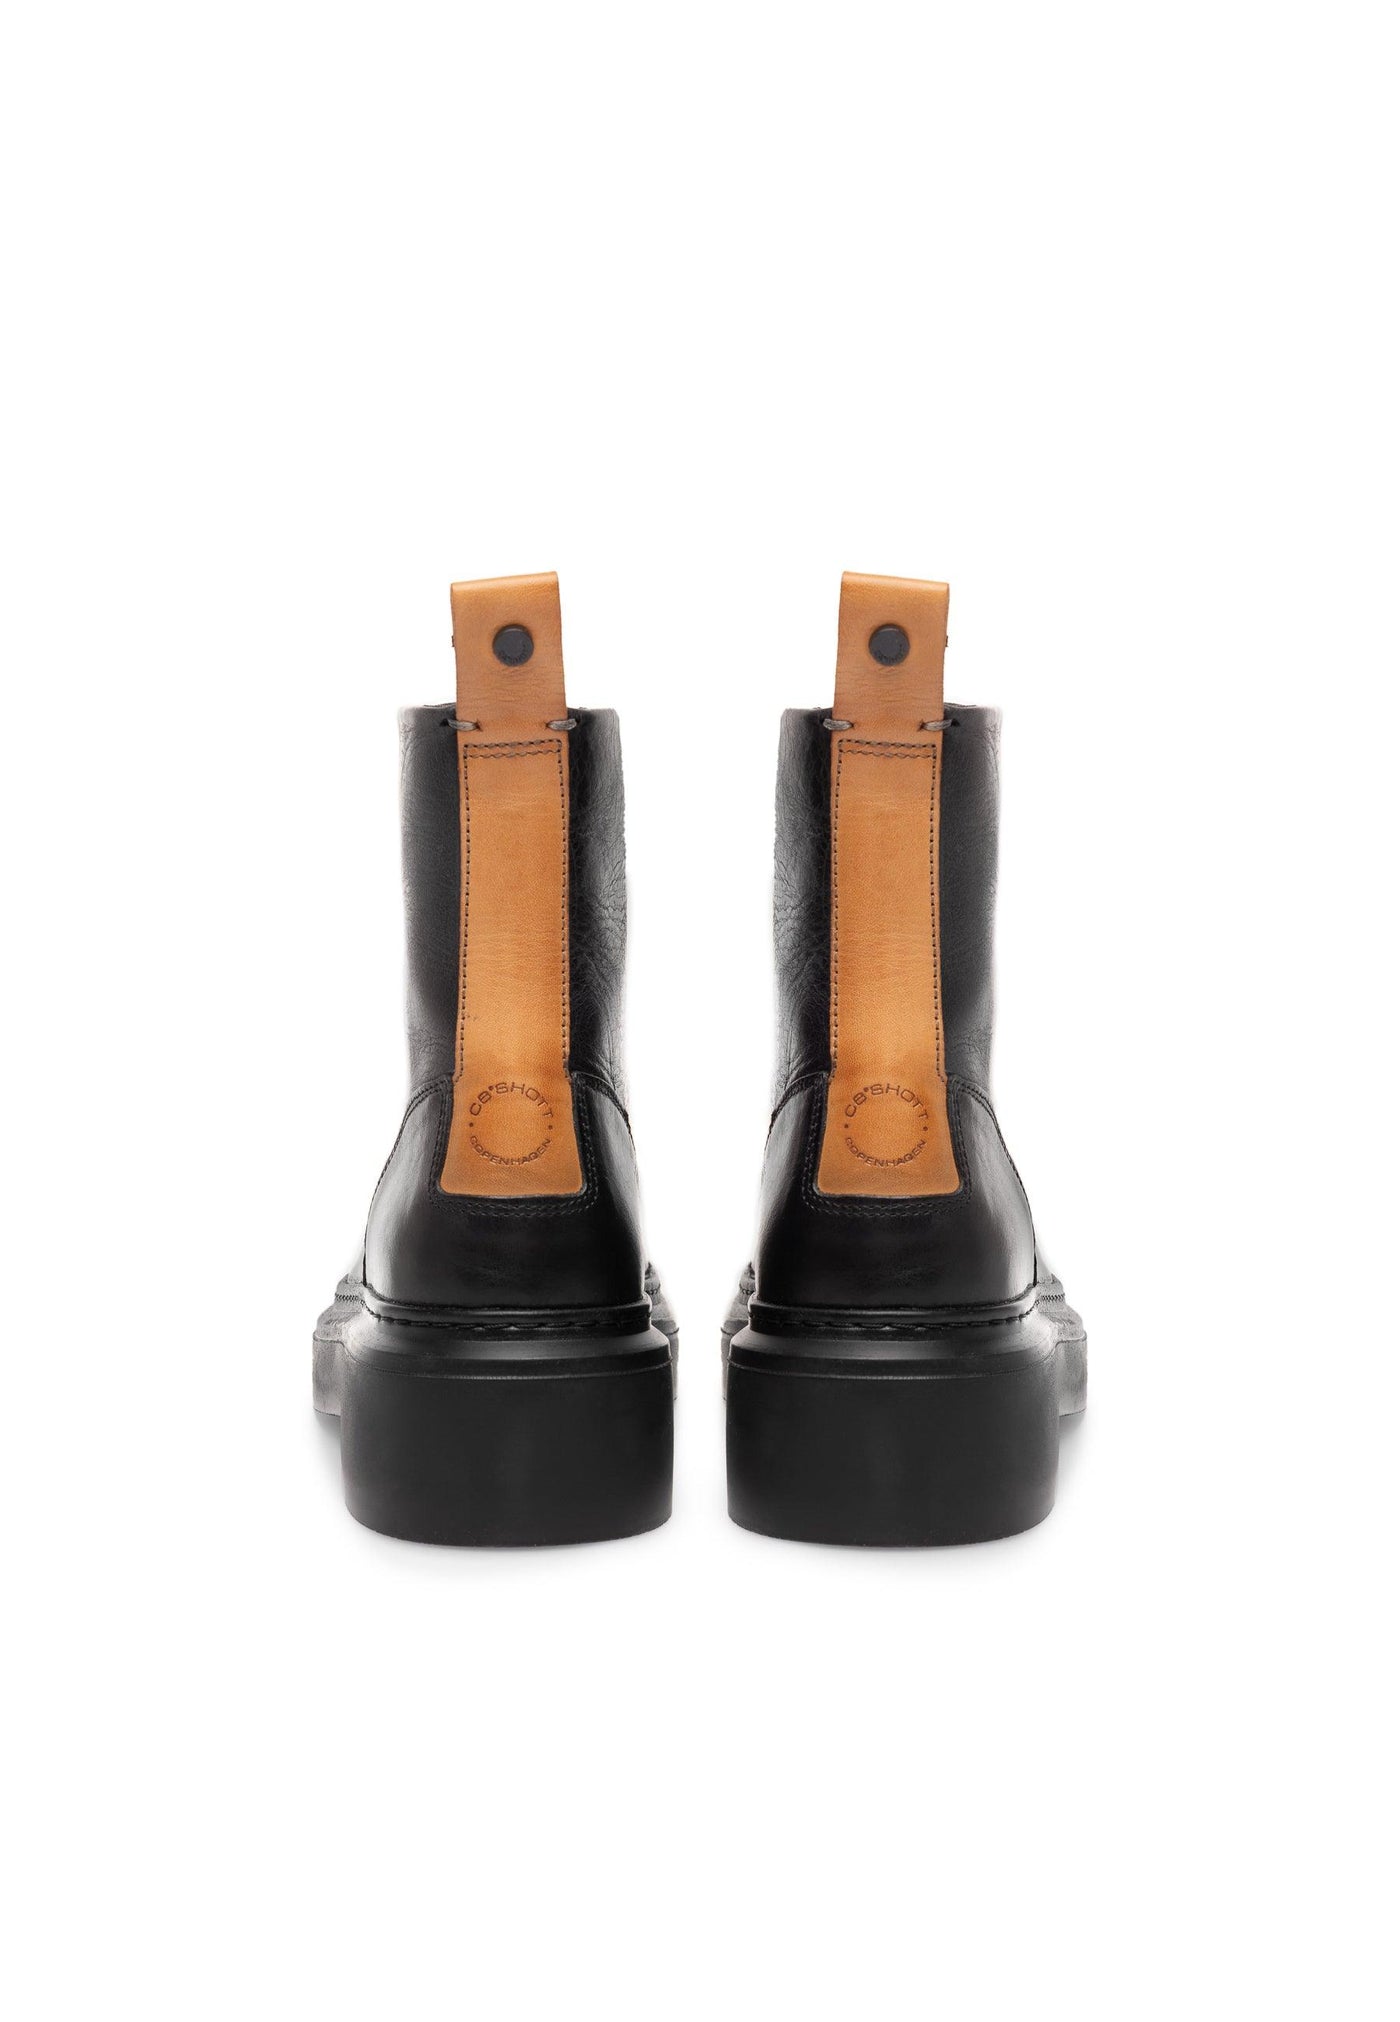 CASKAMMA Front Zipper Boot Leather Vegetable Tanned - Ca'Shott Danmark